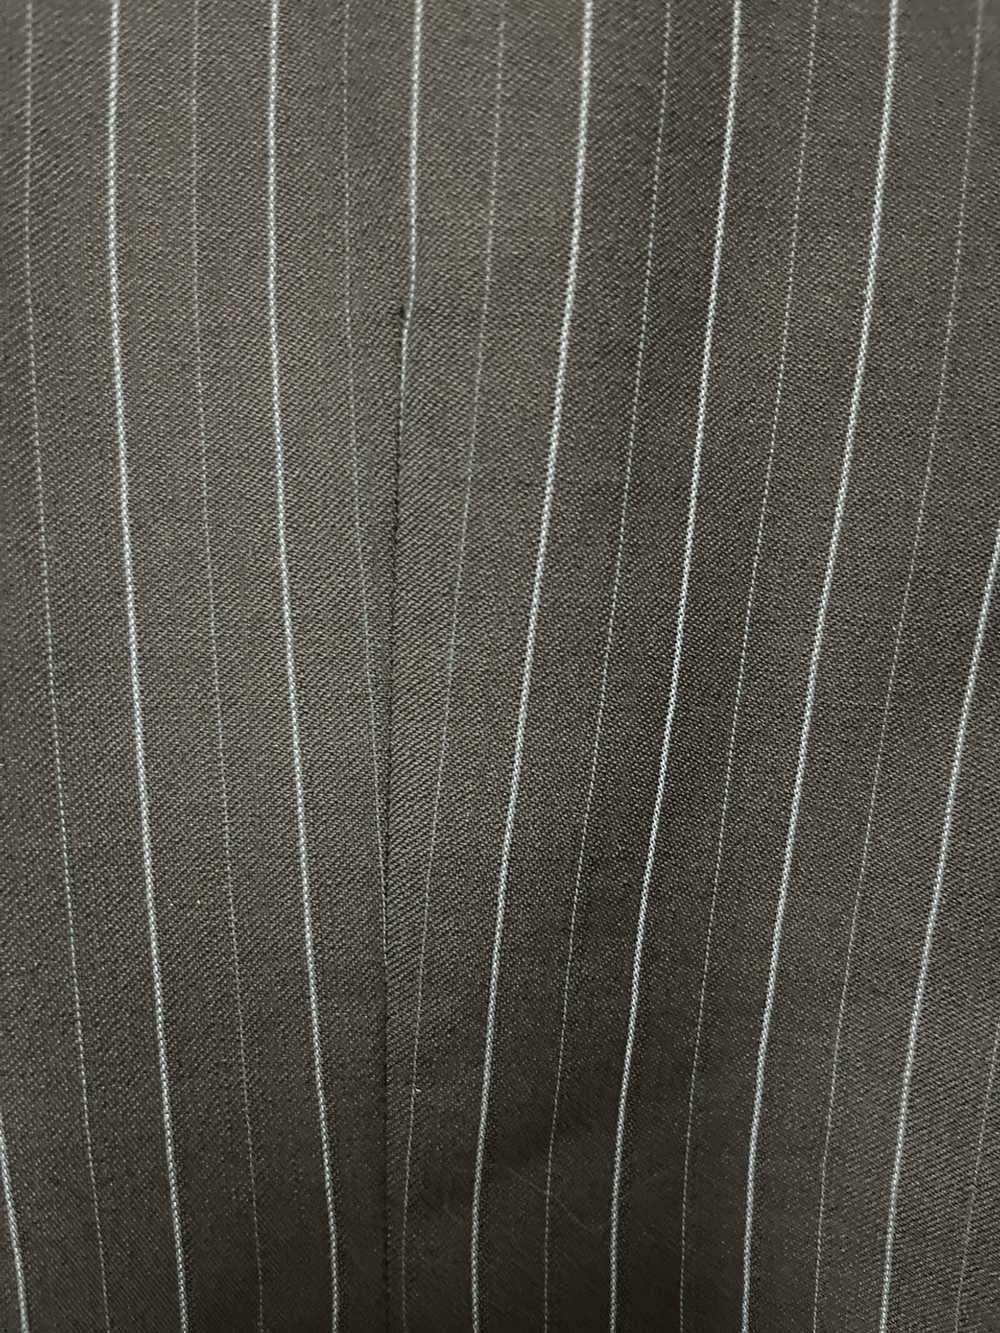 Hugo Boss Hugo Boss Striped Suit Jacket - image 2